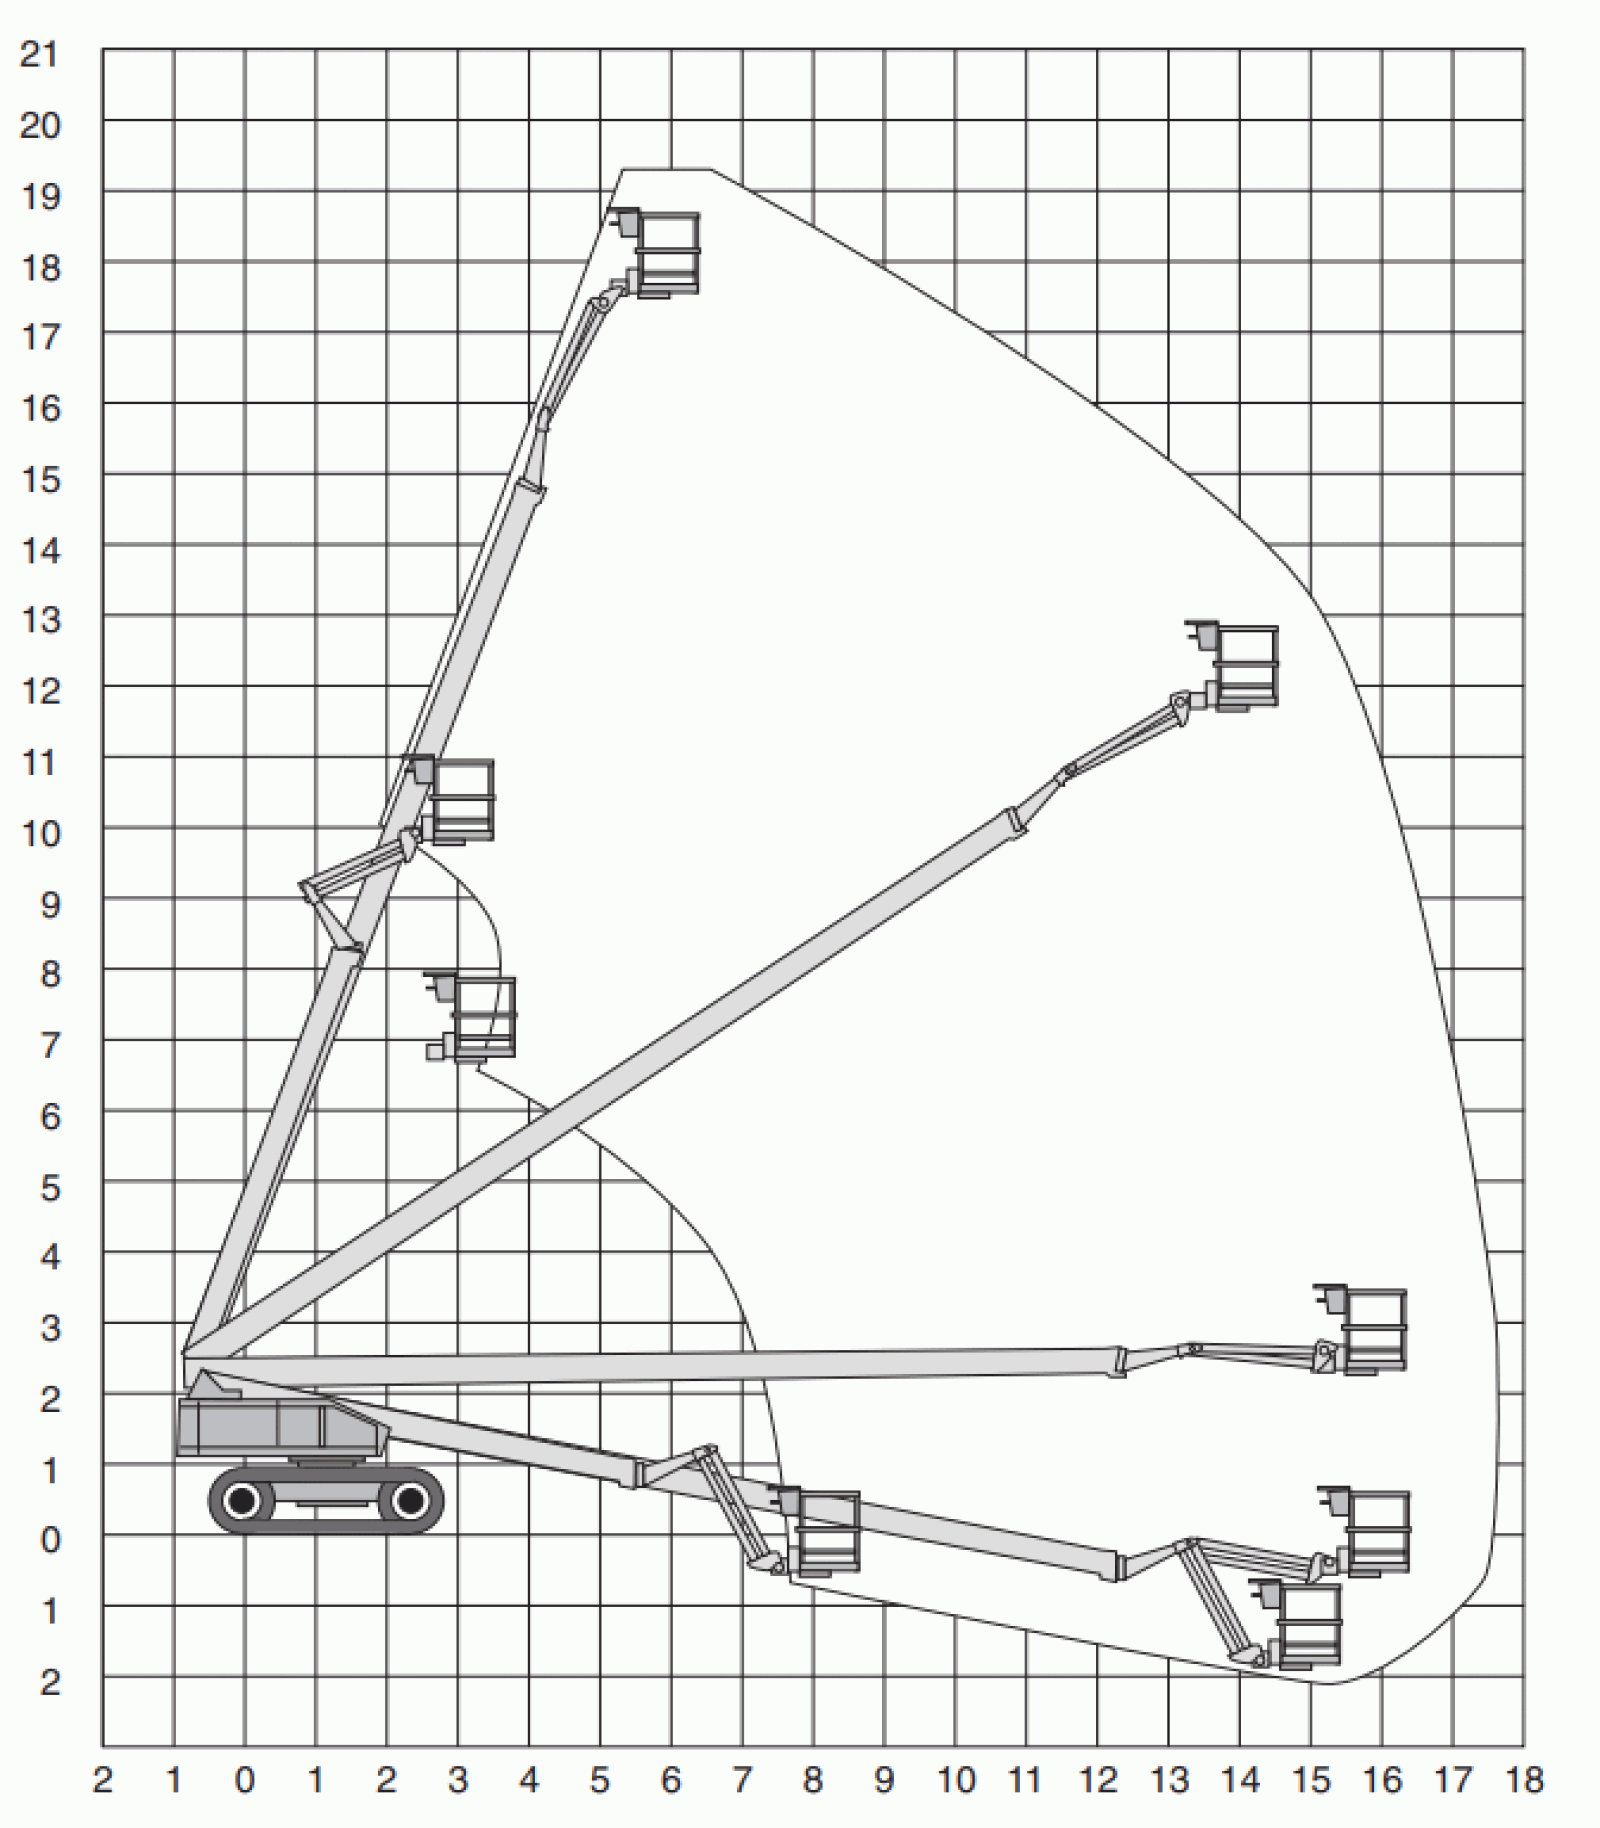 Kettenteleskopbühne 23m Diagramm